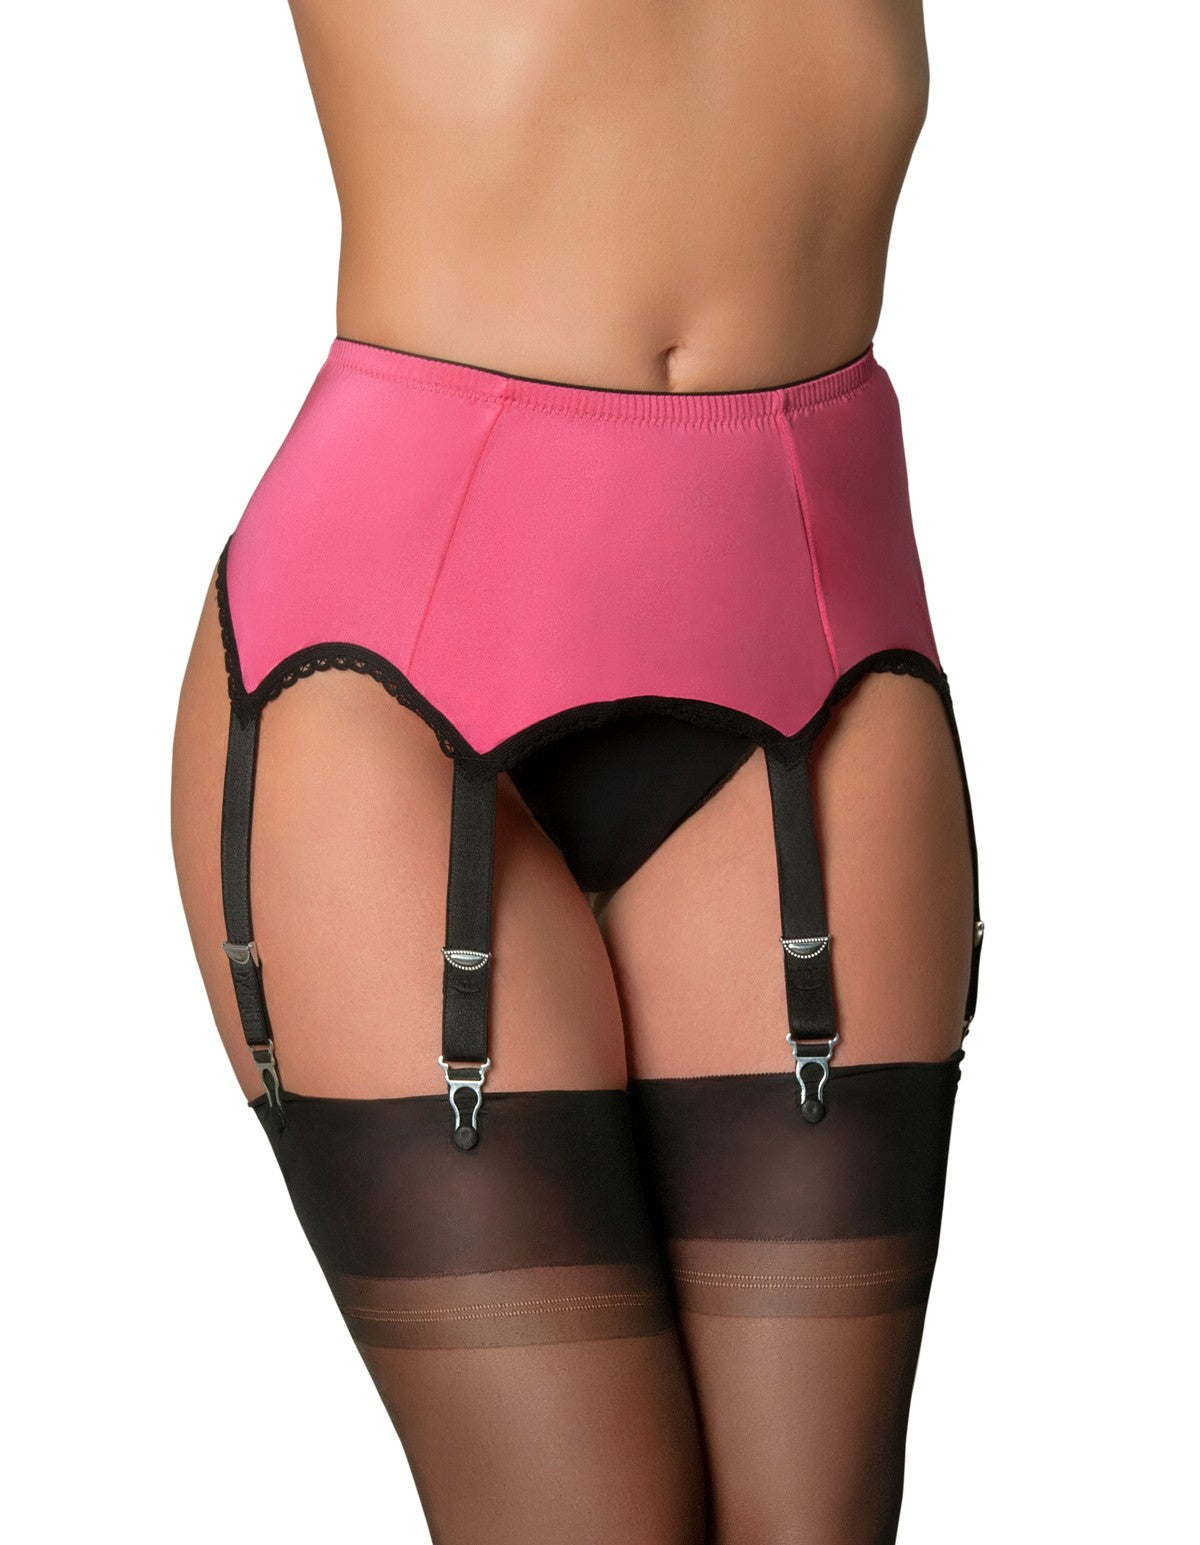 Nylon Dreams NDL59 Pink and Black Lace 6 Strap Suspender Belt